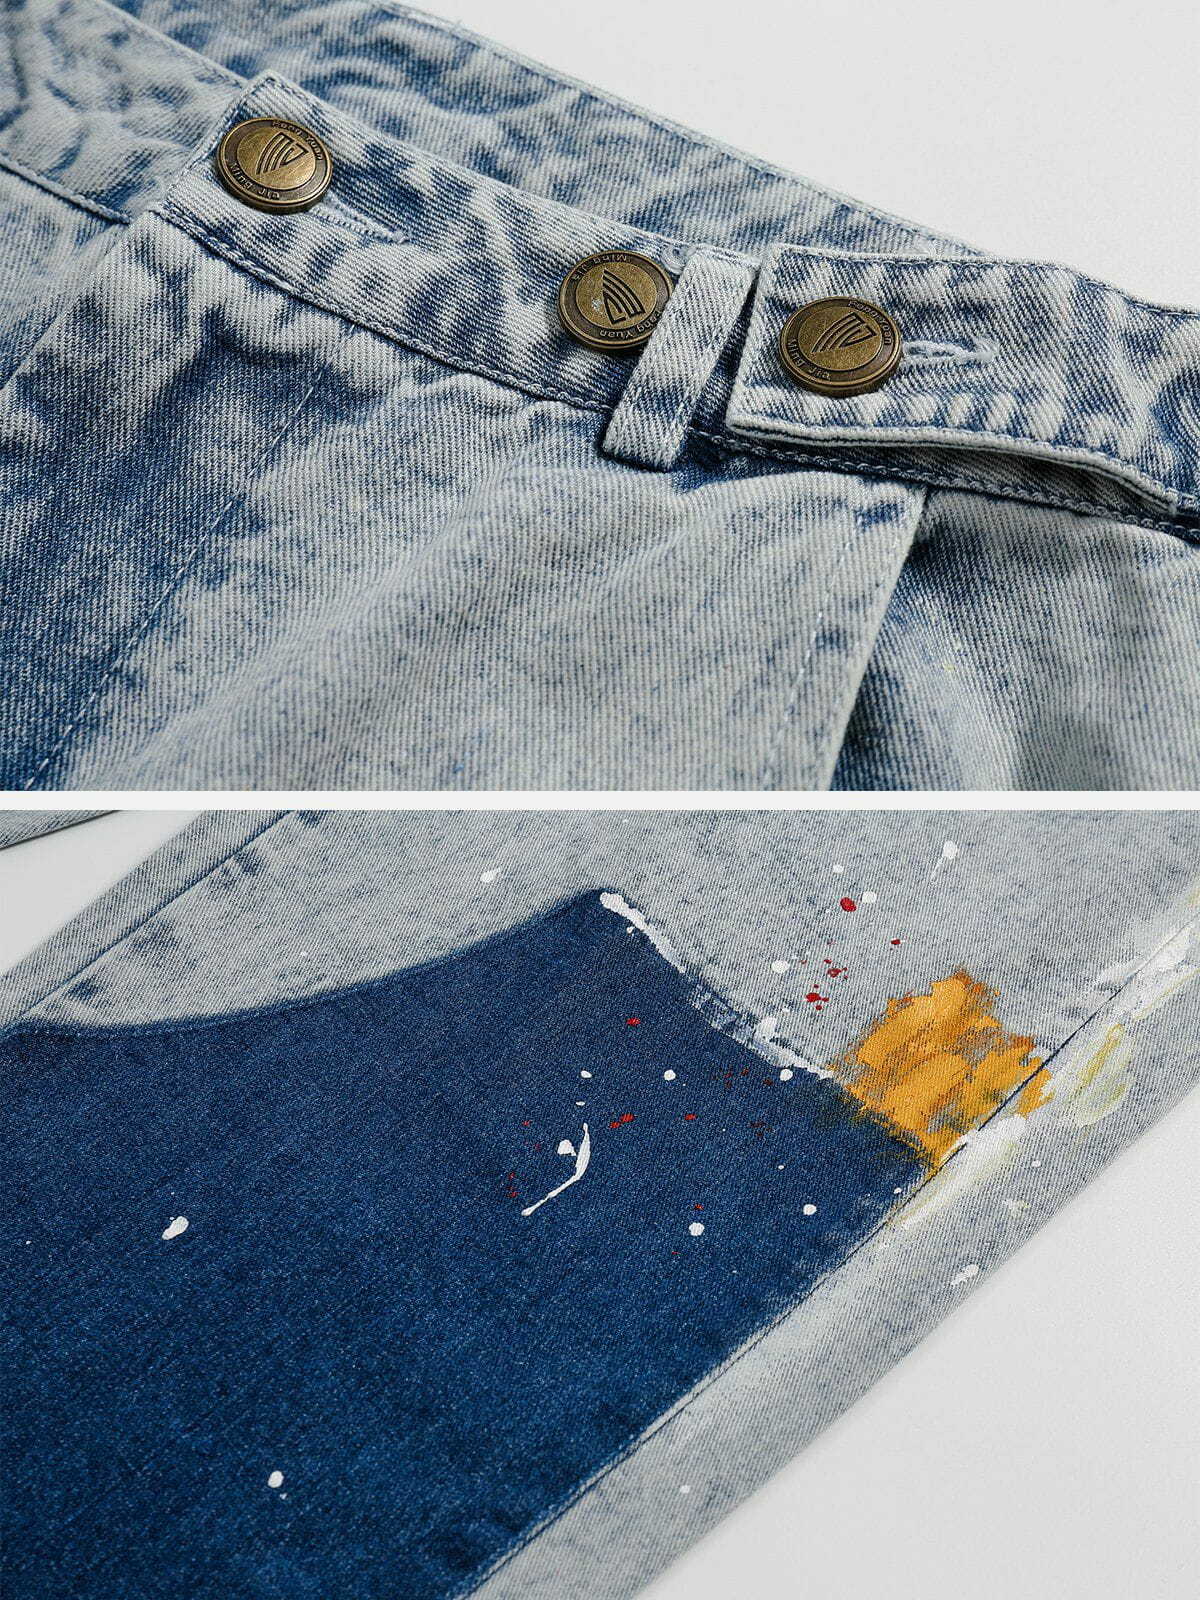 patchwork splash denim jeans edgy streetwear essential 7872